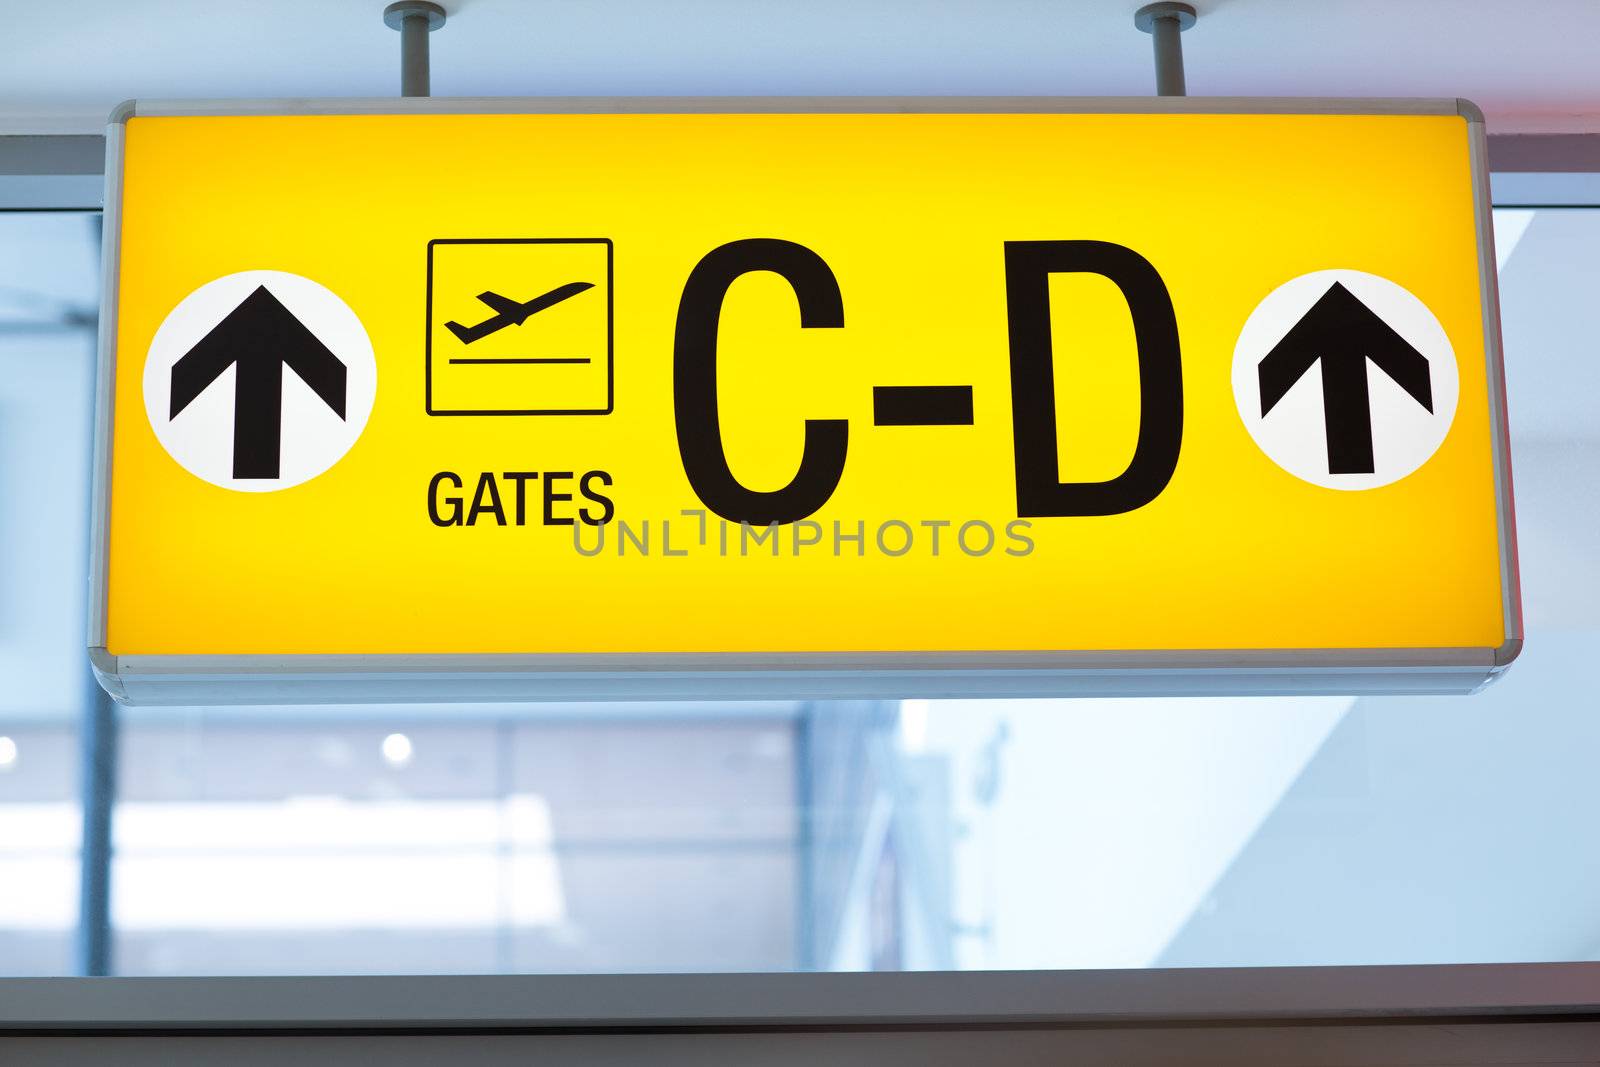 signs at an airport